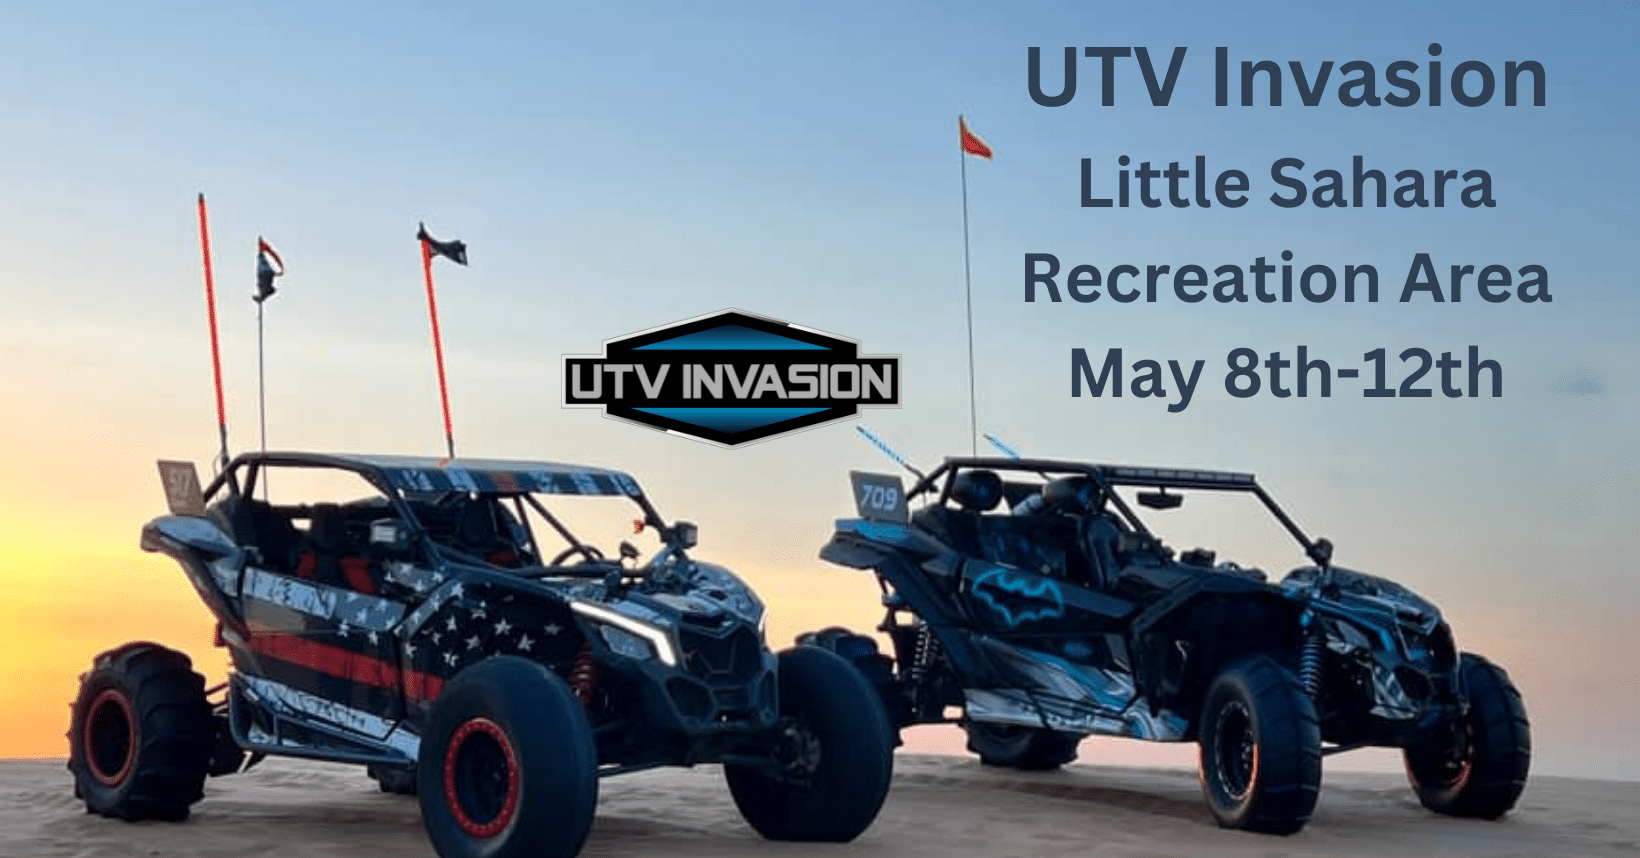 UTV Invasion Little Sahara Recreation